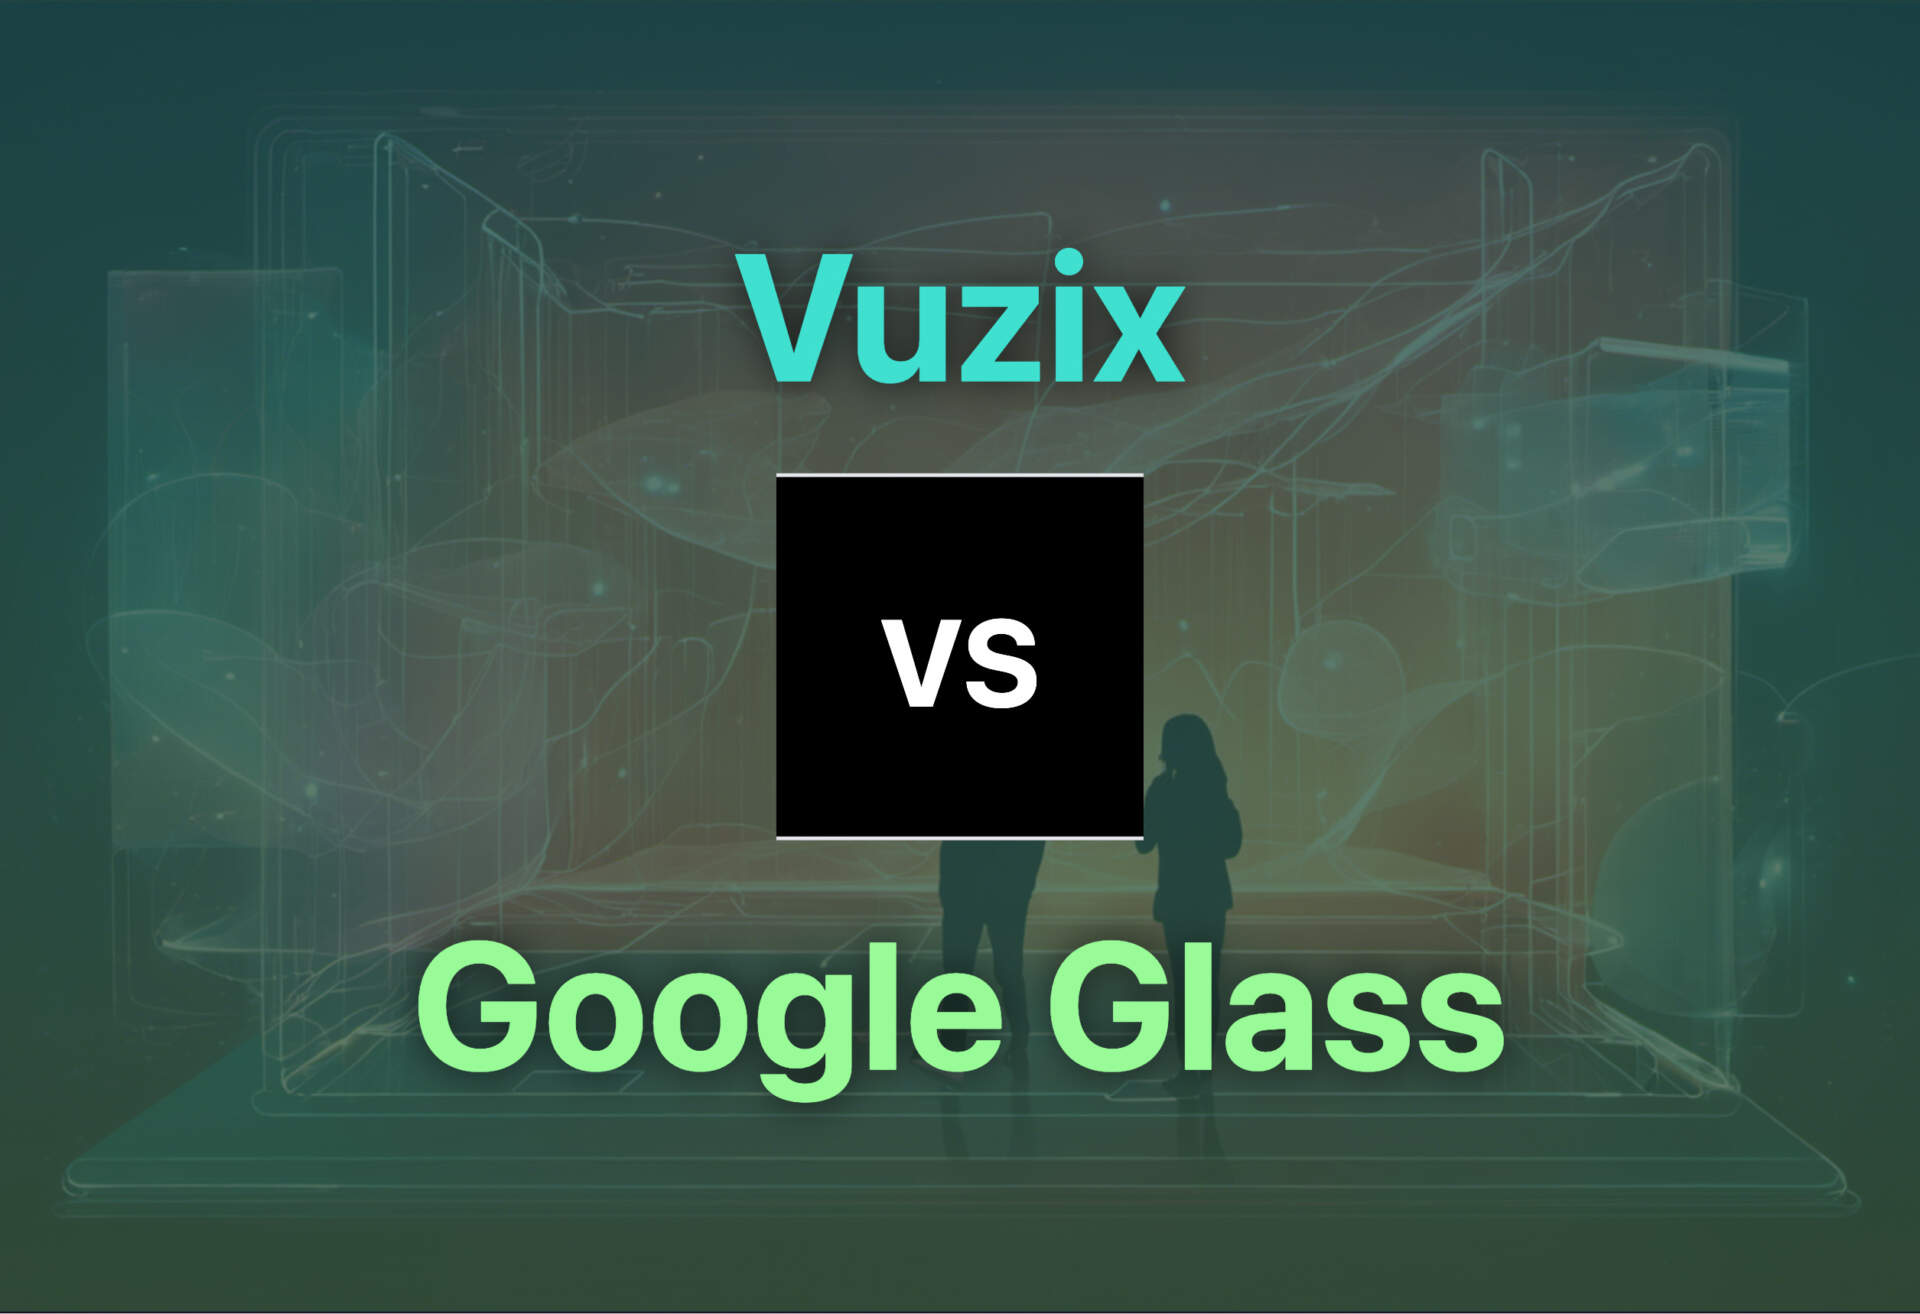 Vuzix and Google Glass compared